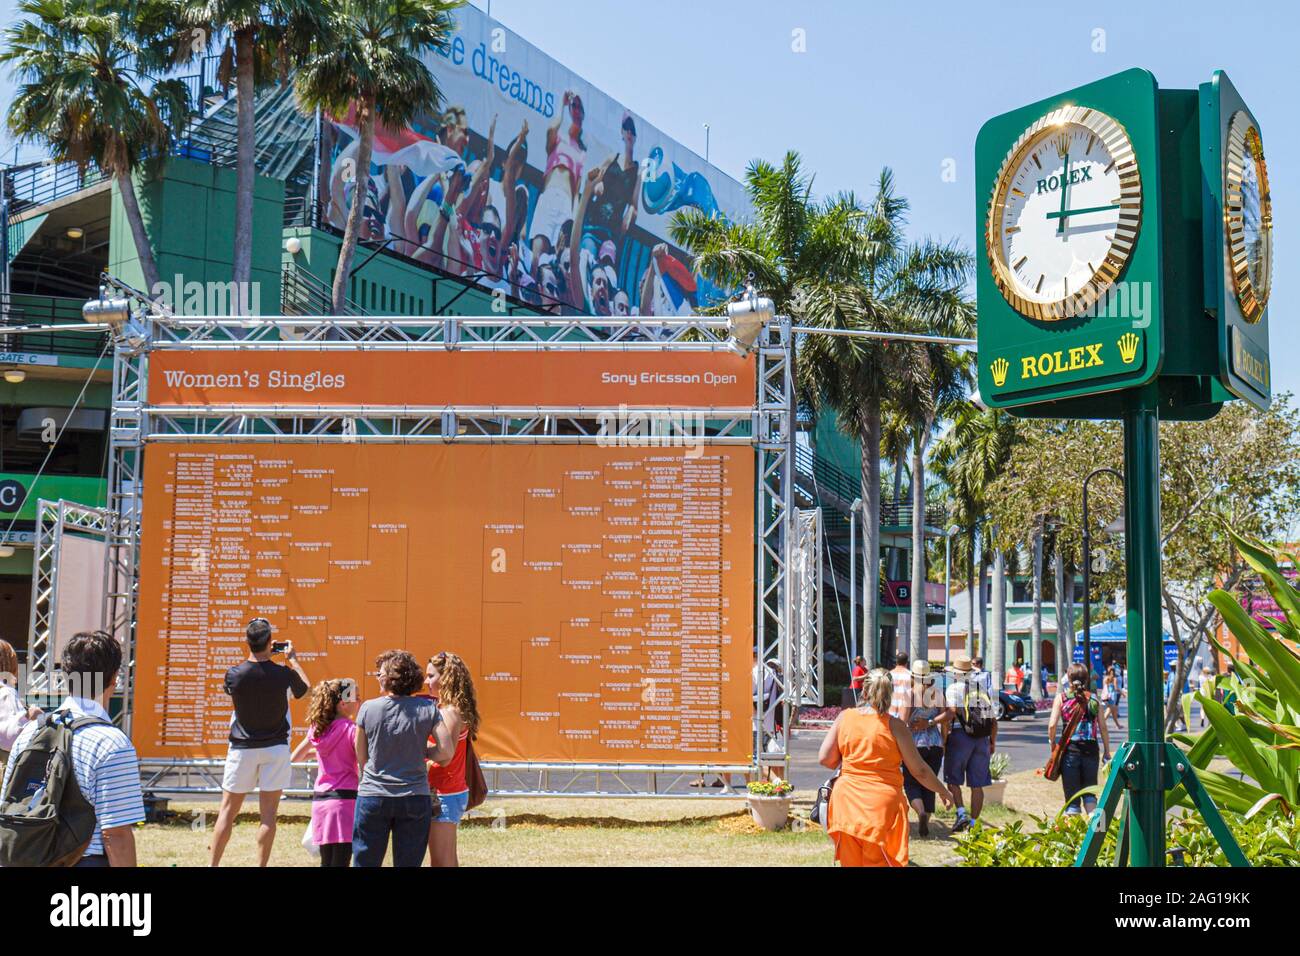 Miami Florida,Key Biscayne,Sony Ericsson OpenAL tournoi de tennis,sponsor sportif,Rolex,Scoreboard,FL100405013 Banque D'Images